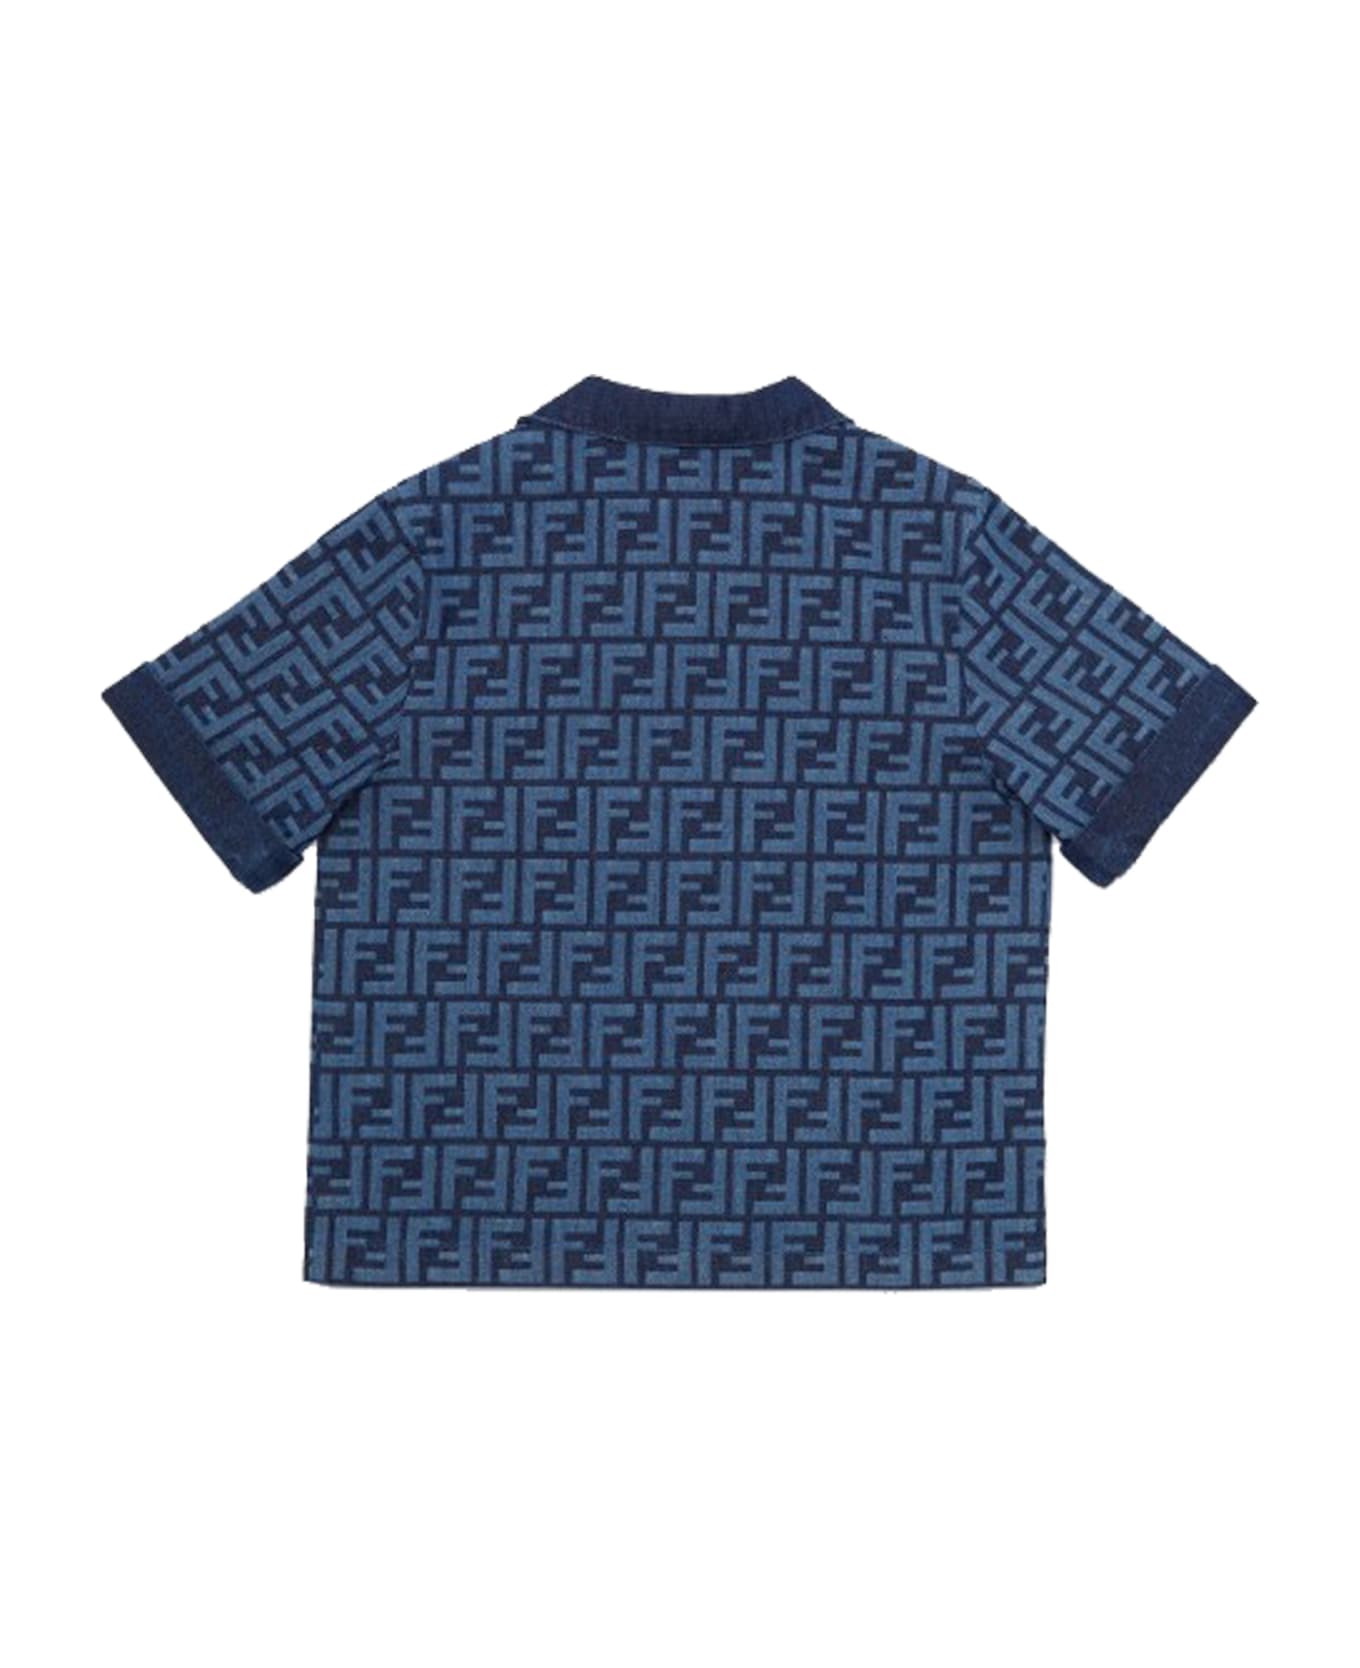 Fendi Shirt - Blue